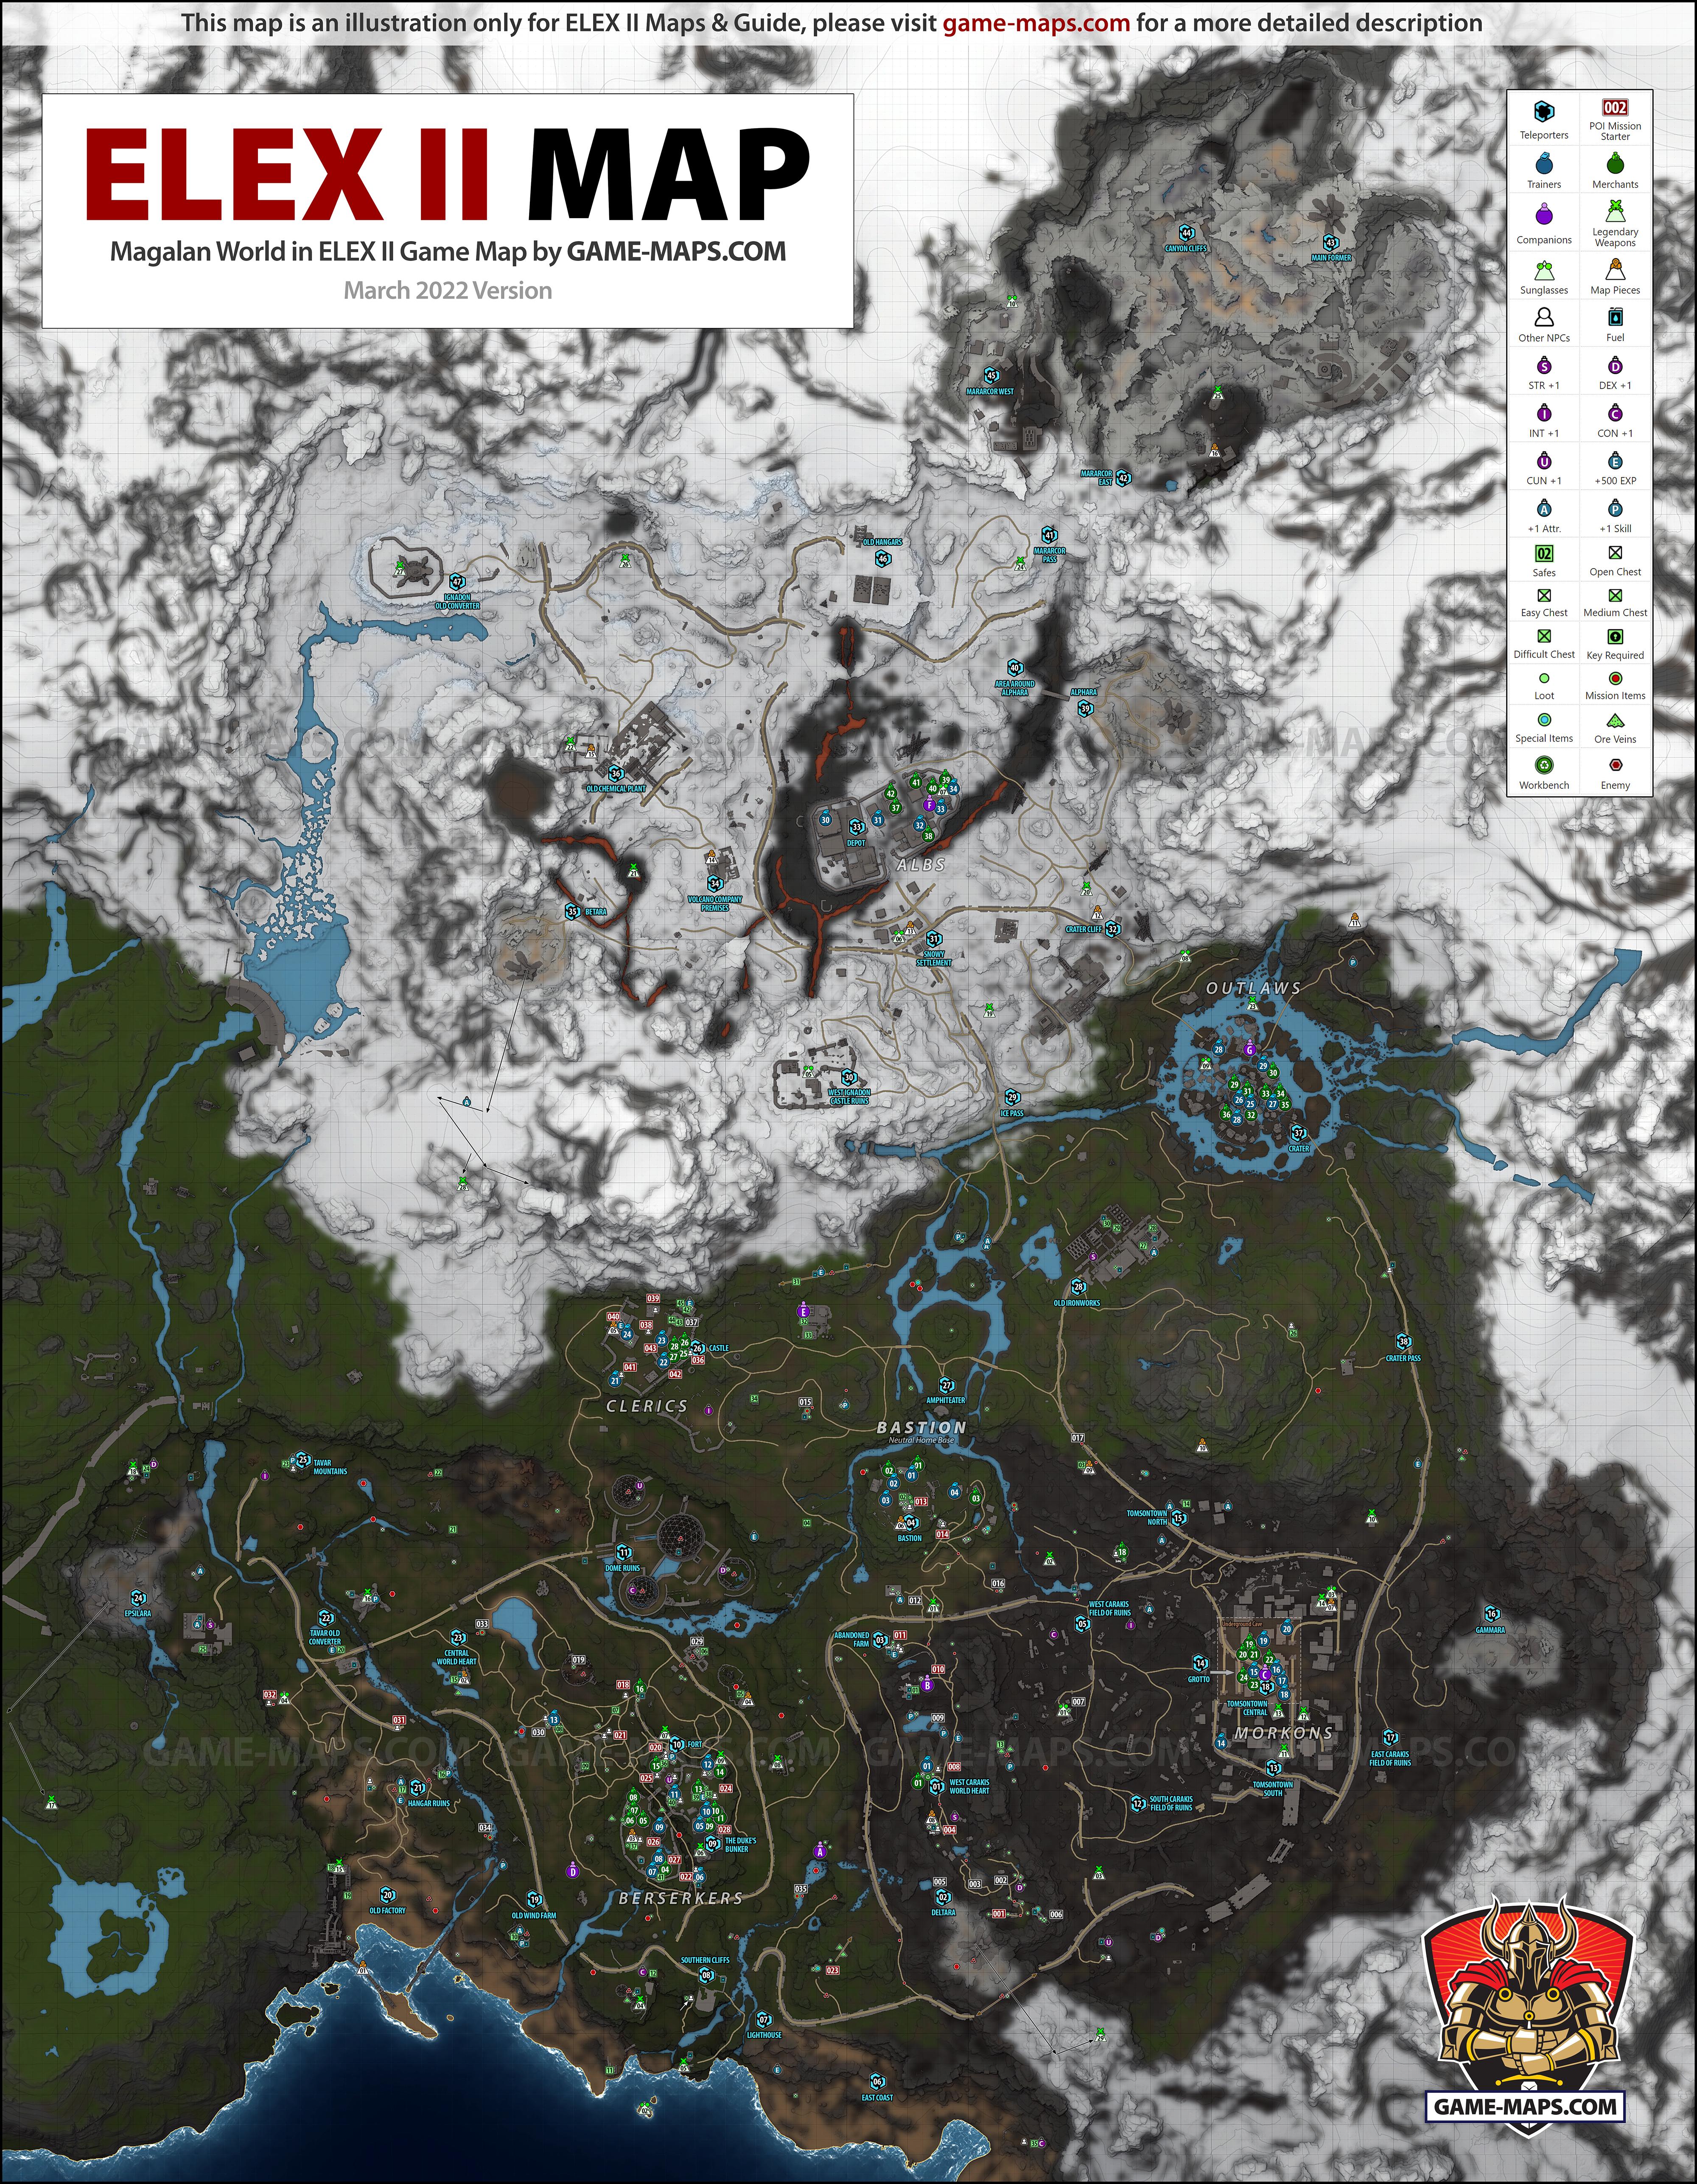 ELEX II World Map